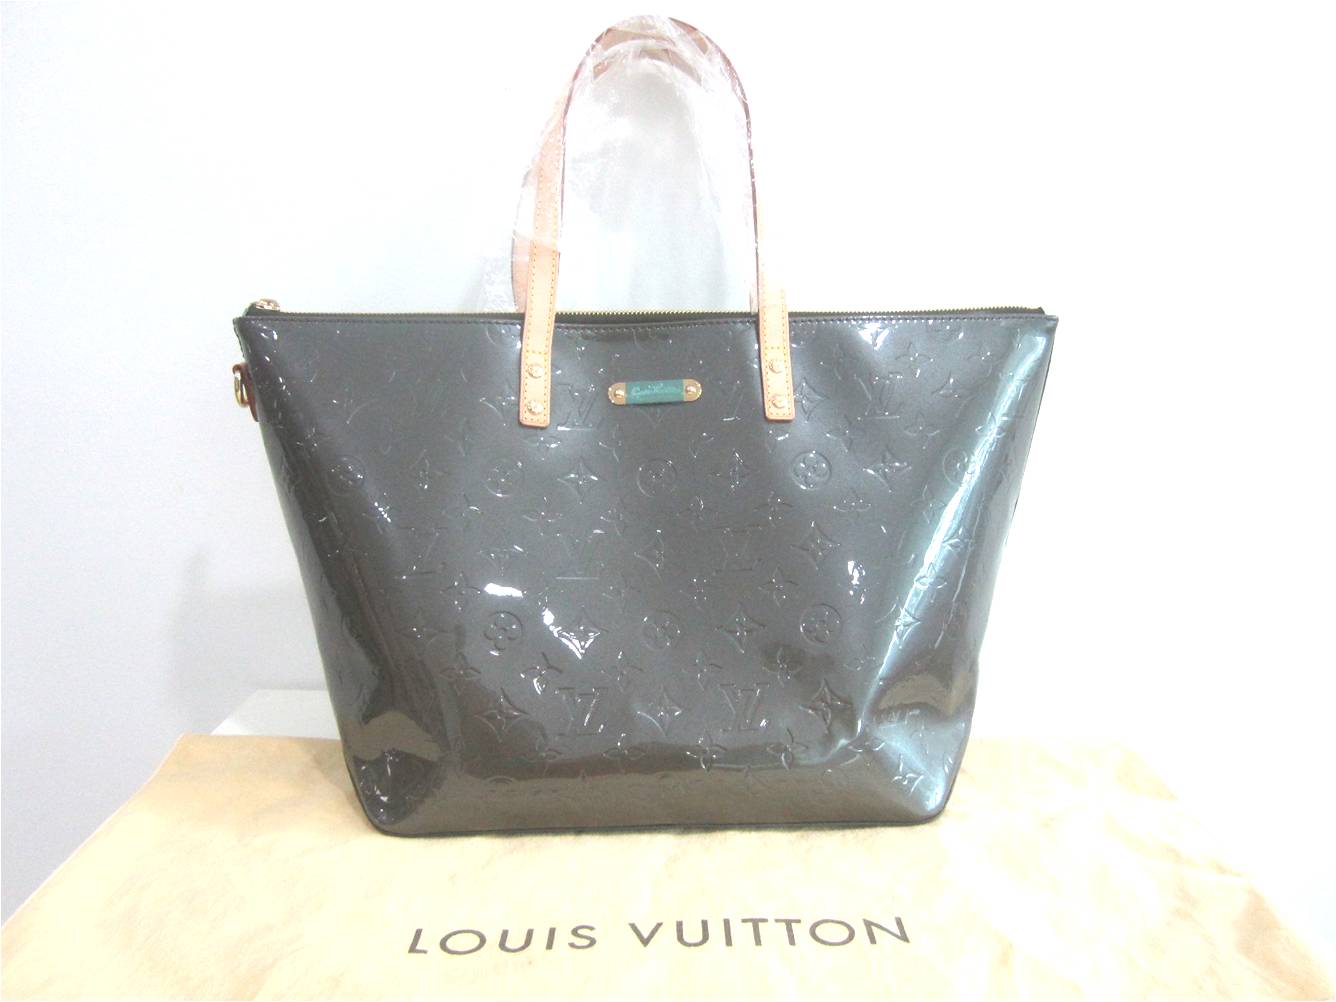 The Bags Affairs ~ Satisfy your lust for designer bags: LOUIS VUITTON MONOGRAM VERNIS VERT ...